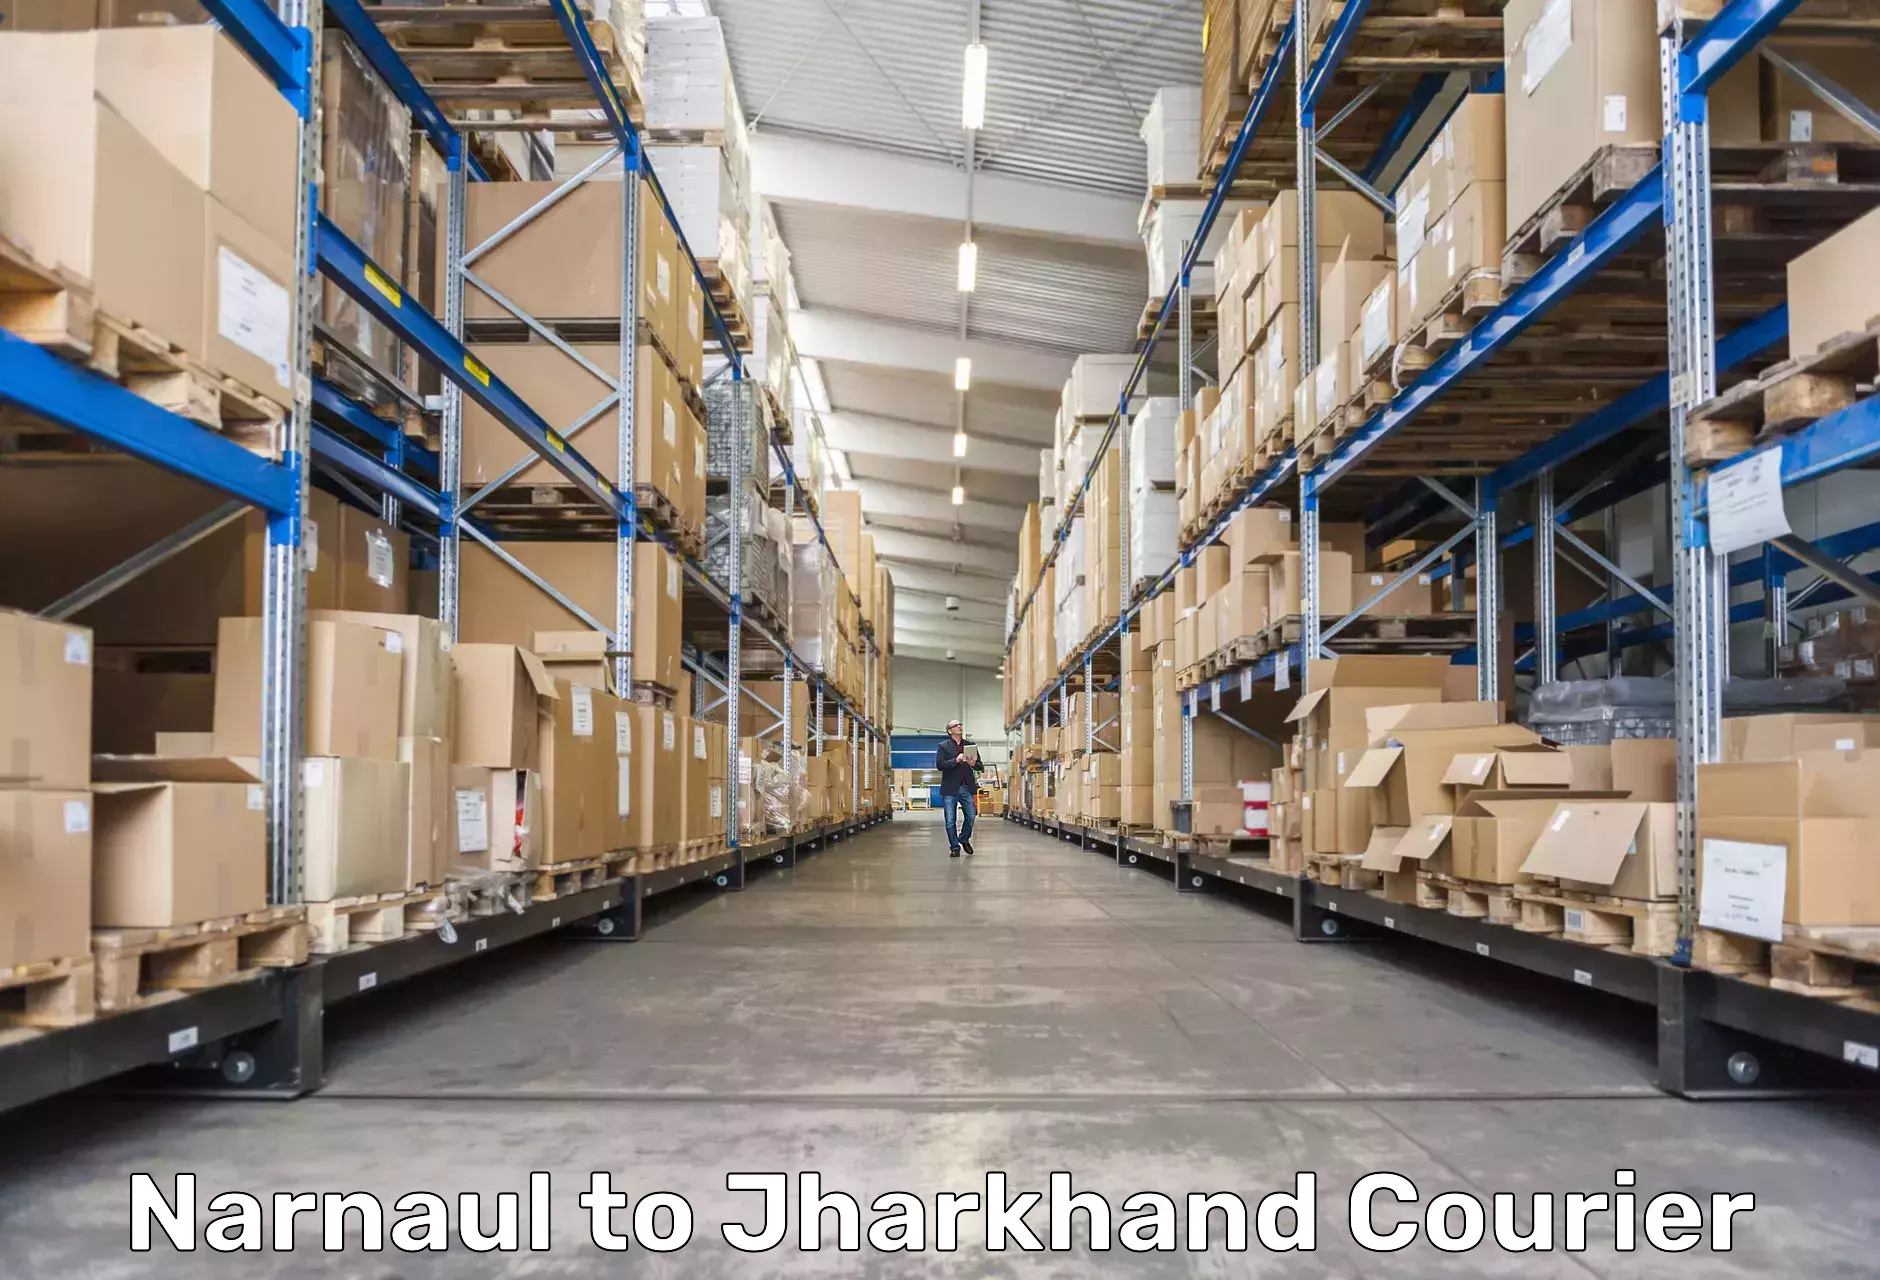 Courier service comparison in Narnaul to Ormanjhi